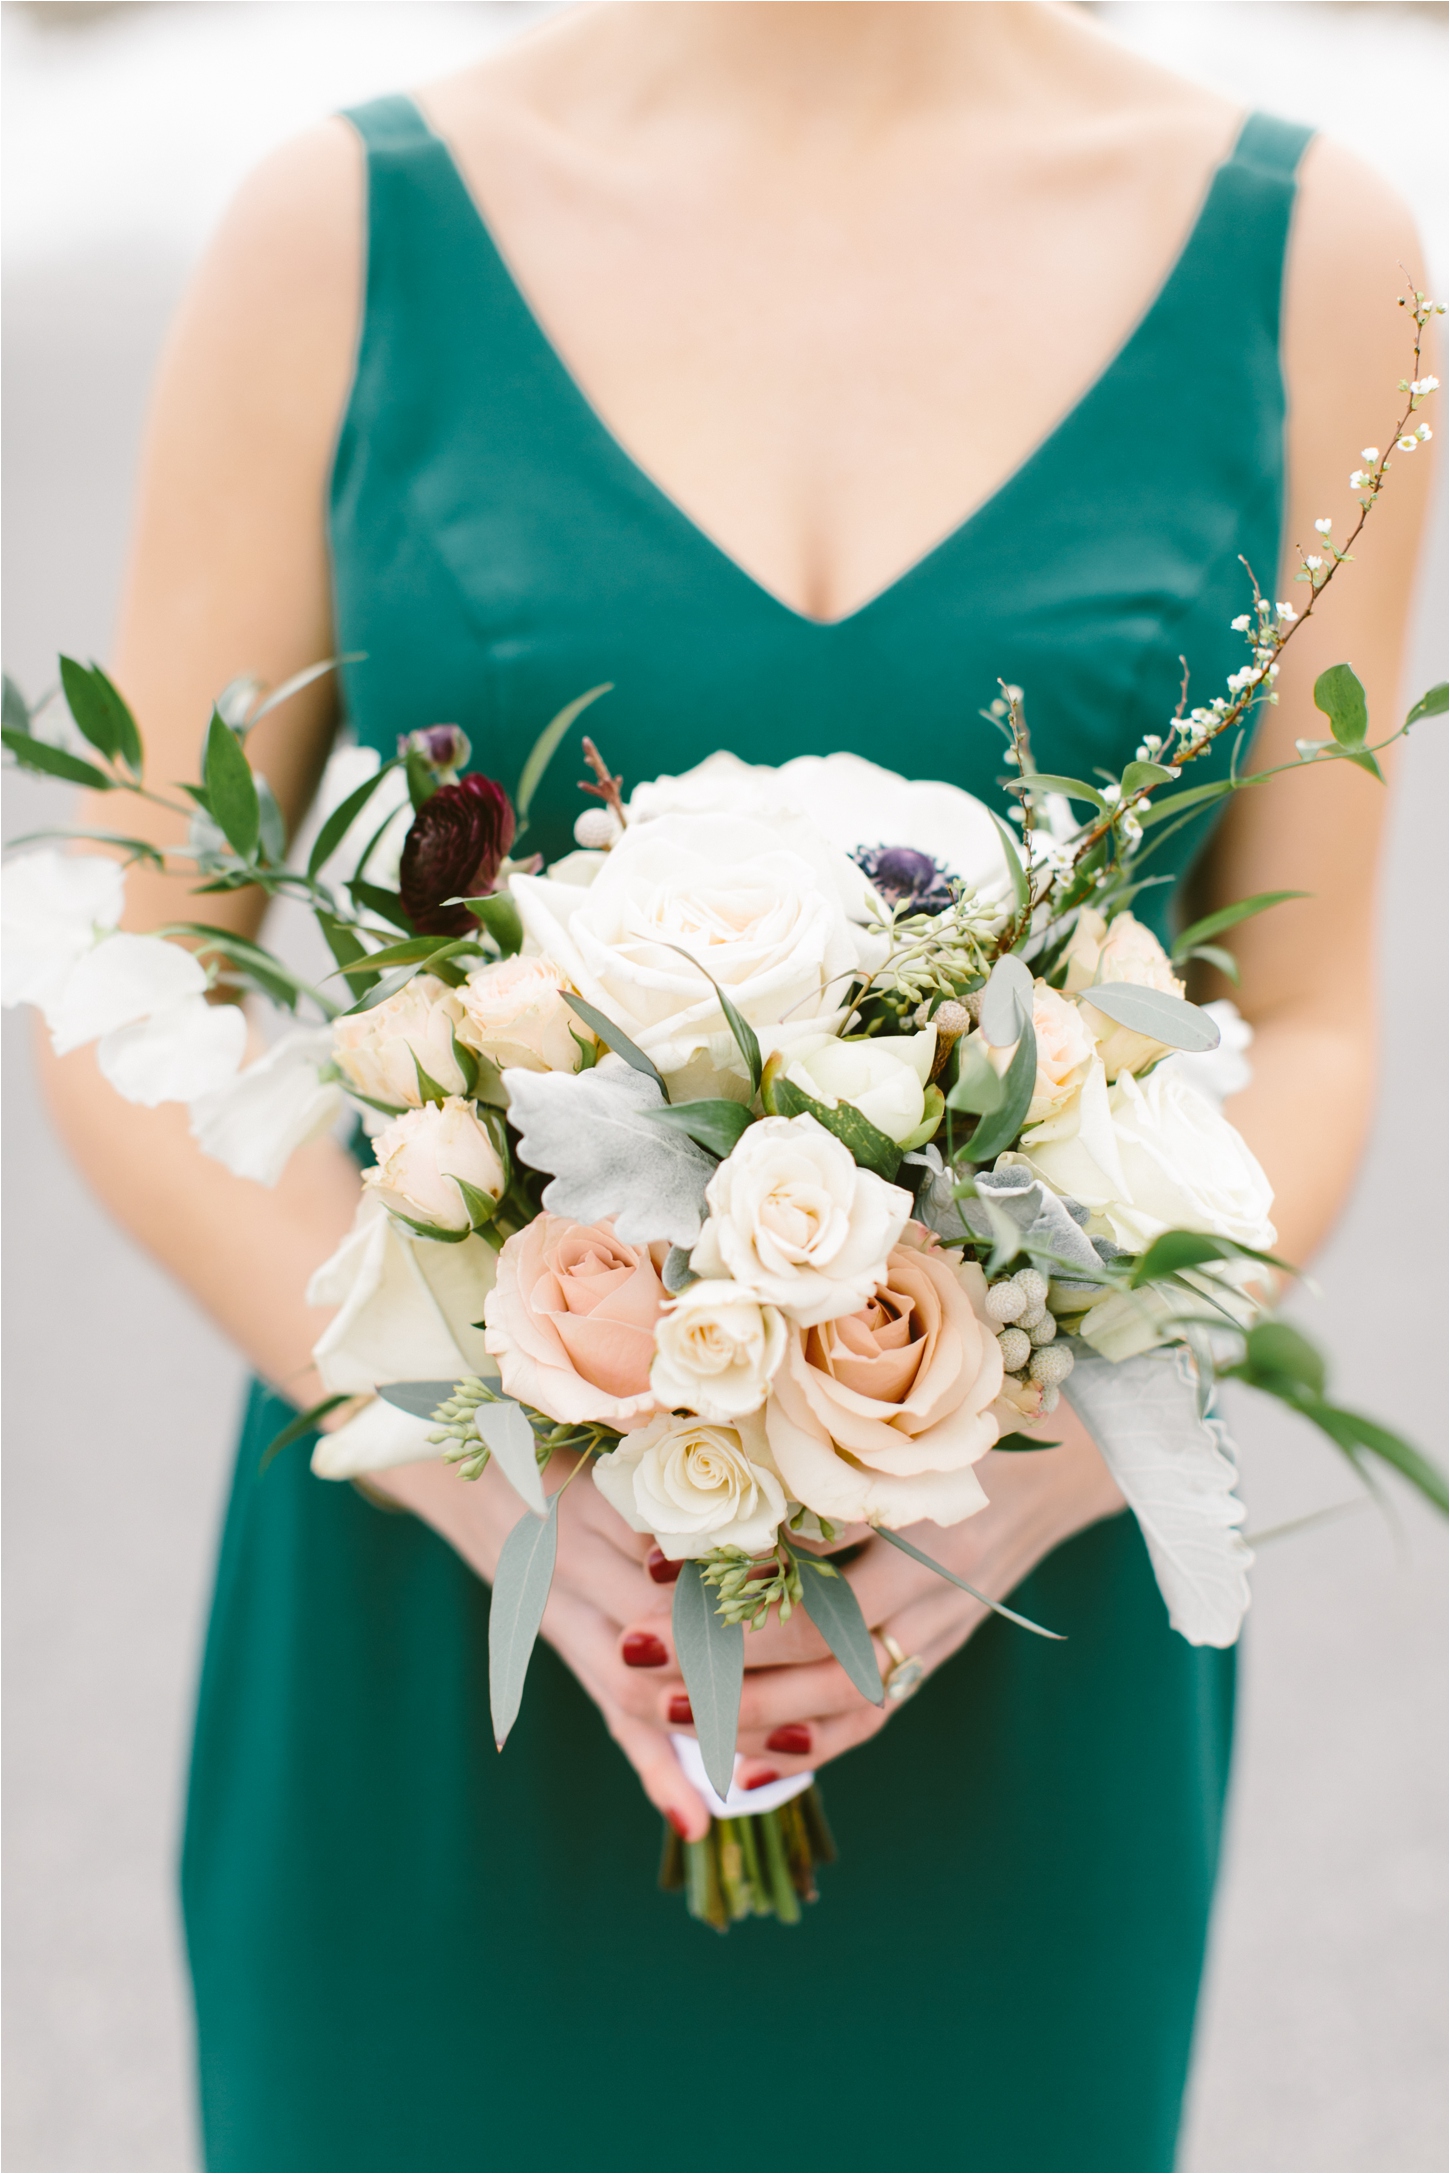 Jade green bridesmaid dresses with neutral winter florals by Sullivan Owen